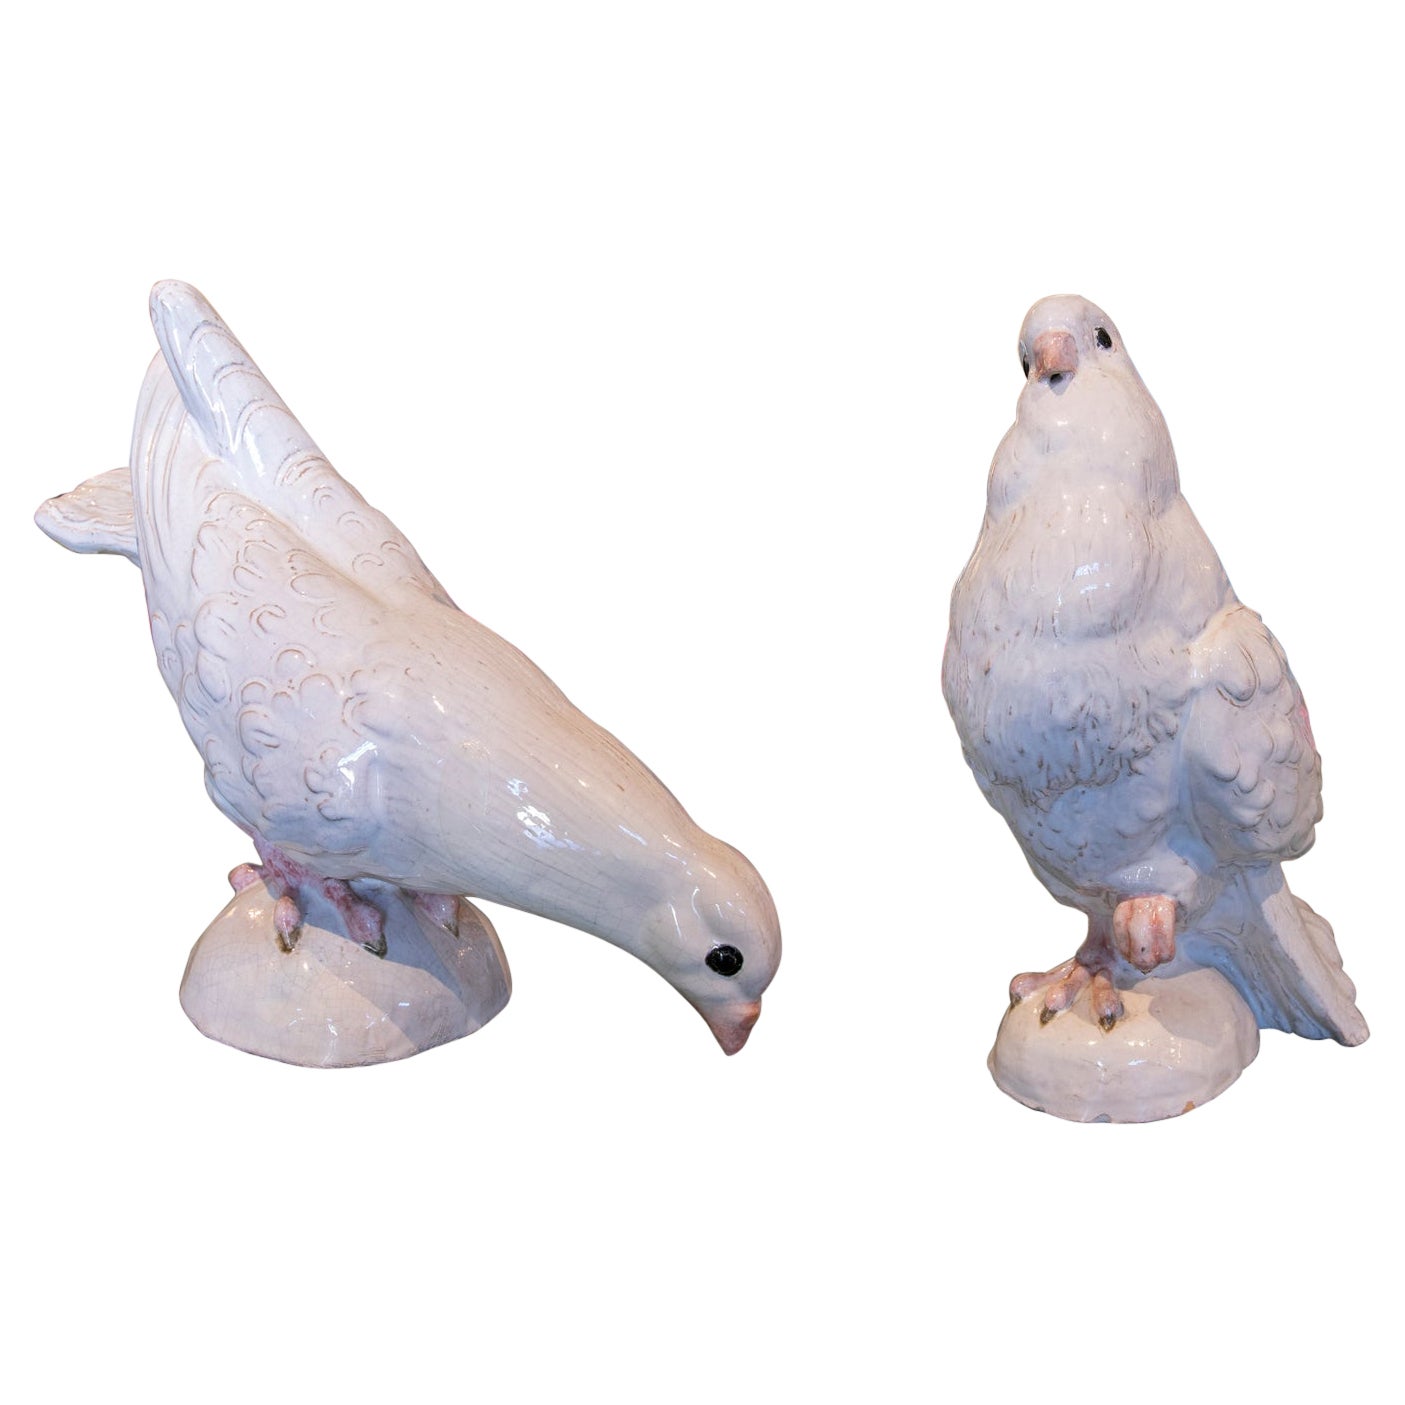 1970s Pair of White Glazed Ceramic Sculptures of Pigeons 